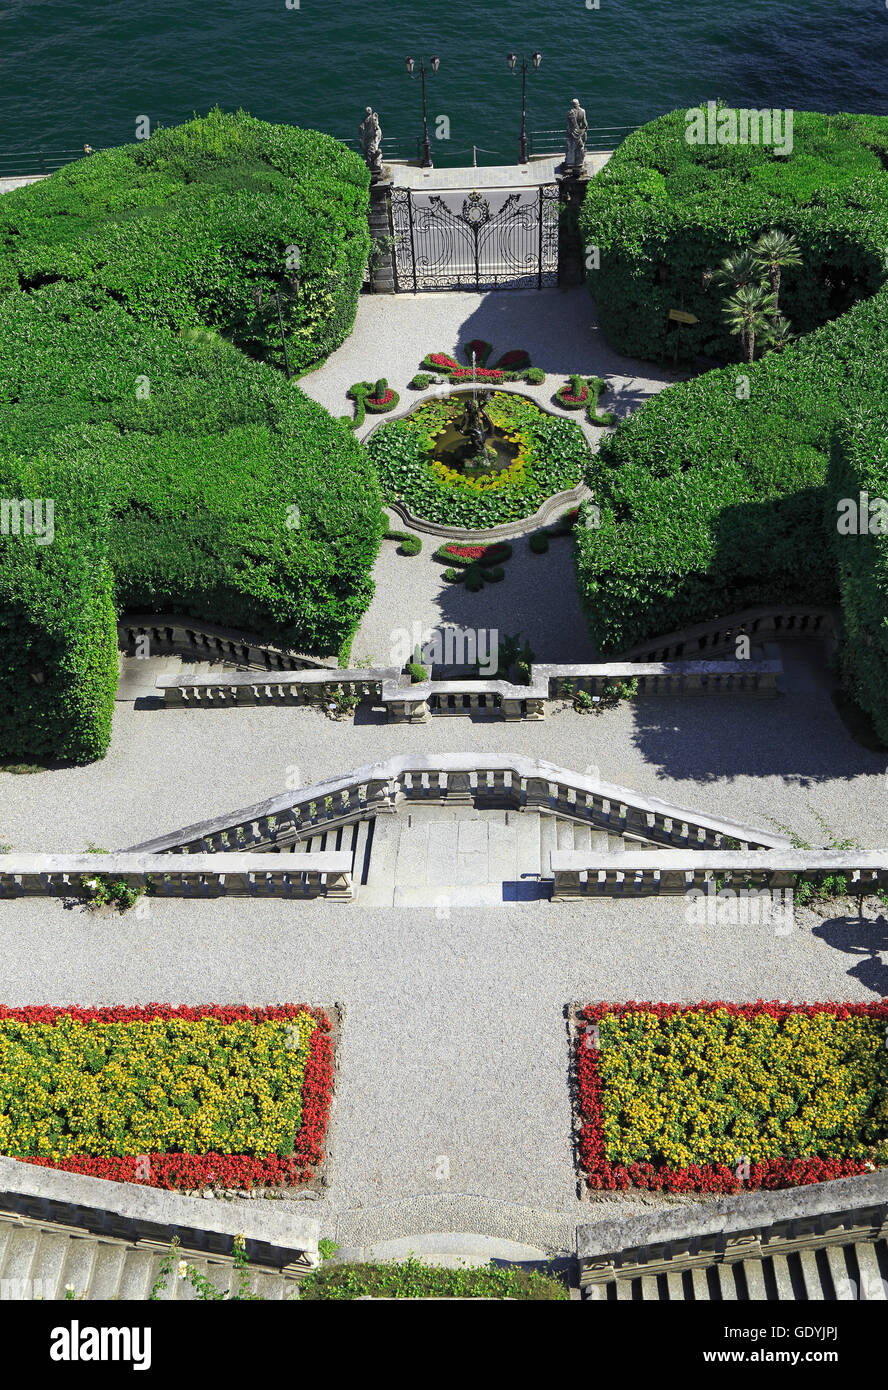 Les jardins de Villa Carlotta, Lac de Côme, Italie Banque D'Images